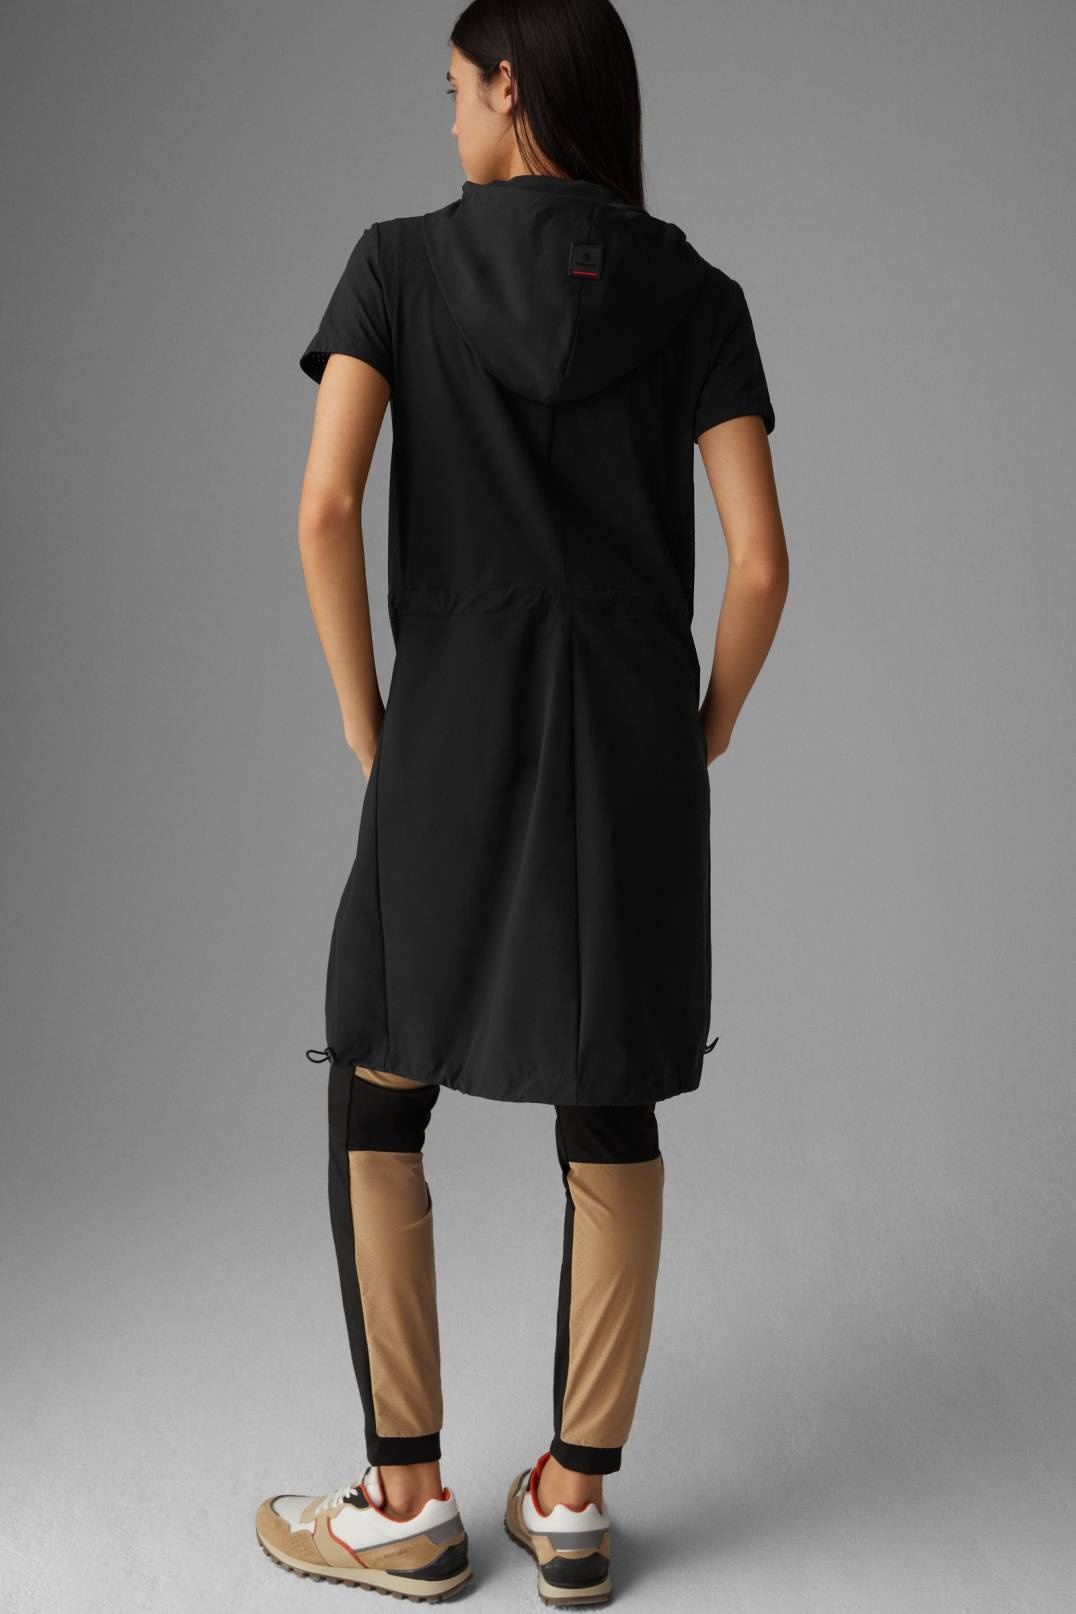 VALENTINA FUNCTIONAL DRESS IN BLACK - 3